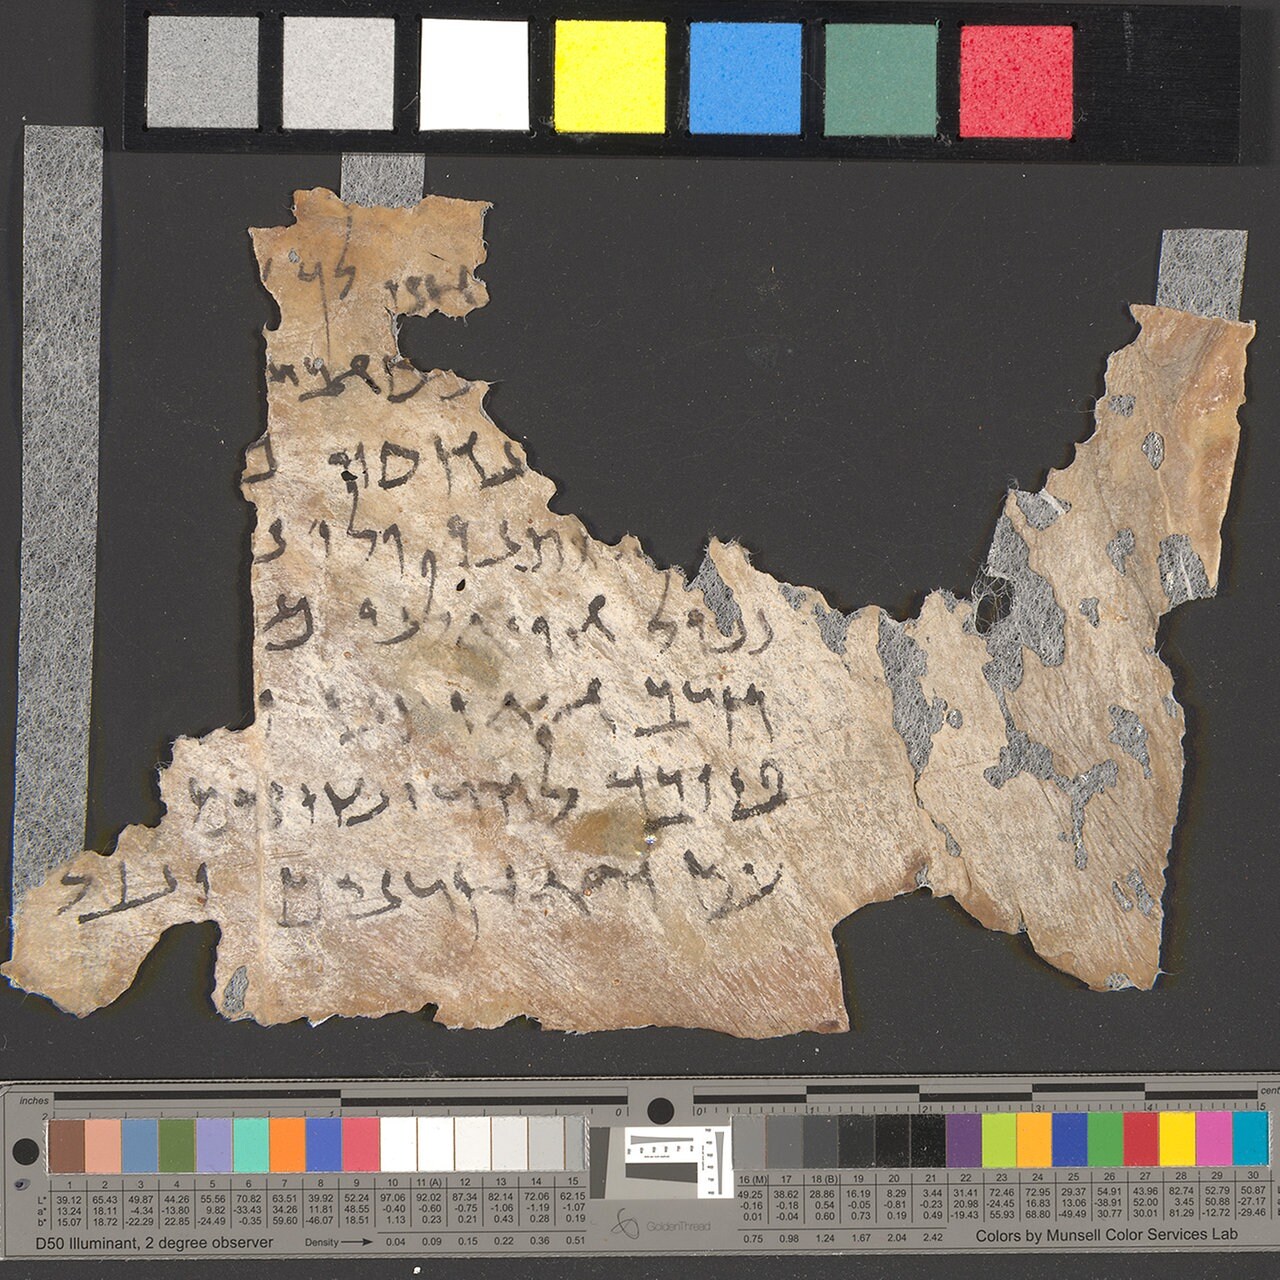 Erste Bibel auf Hebräisch DNA-Analyse löst Rätsel um die berühmten Qumran-Rollen MDR.DE Foto Bild Foto